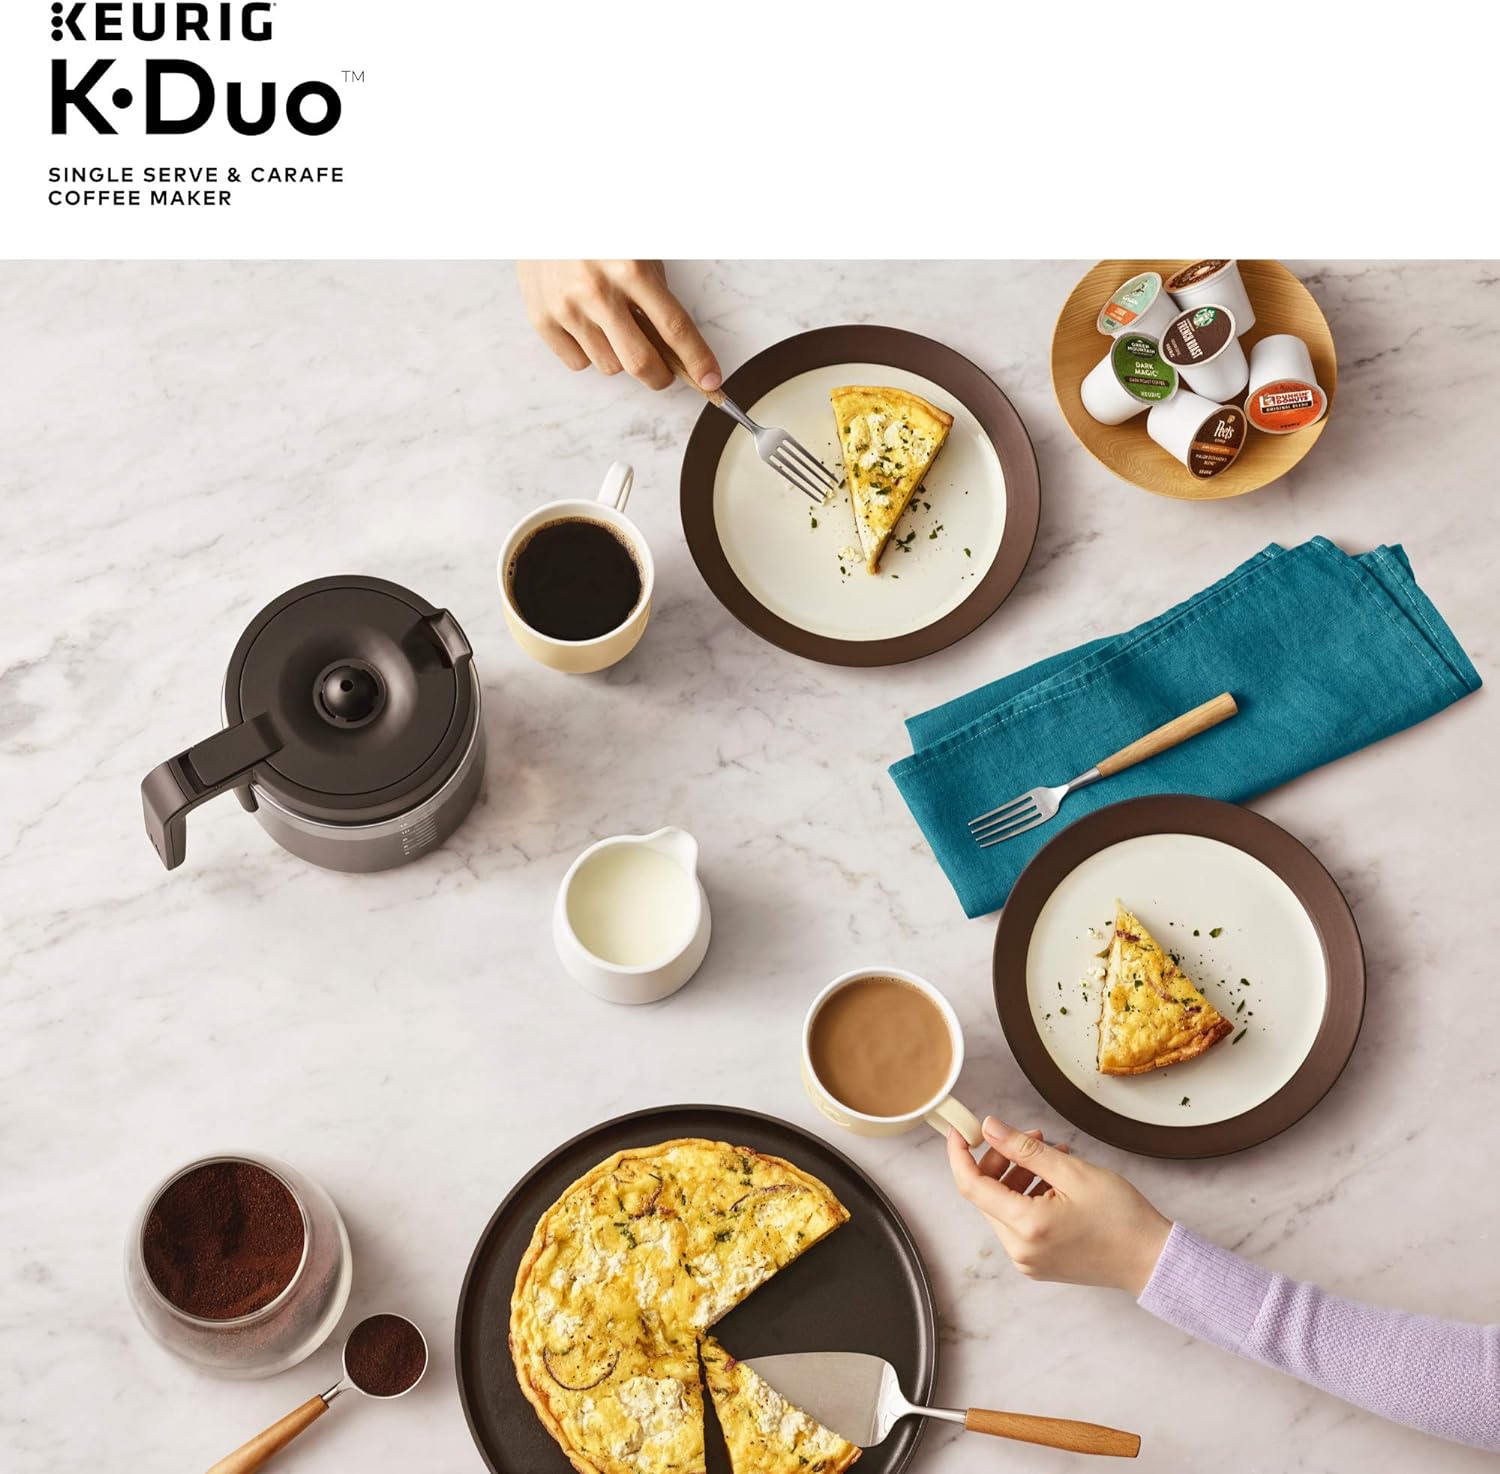 Keurig K-Duo Single Serve K-Cup Pod & Carafe Coffee Maker. Black